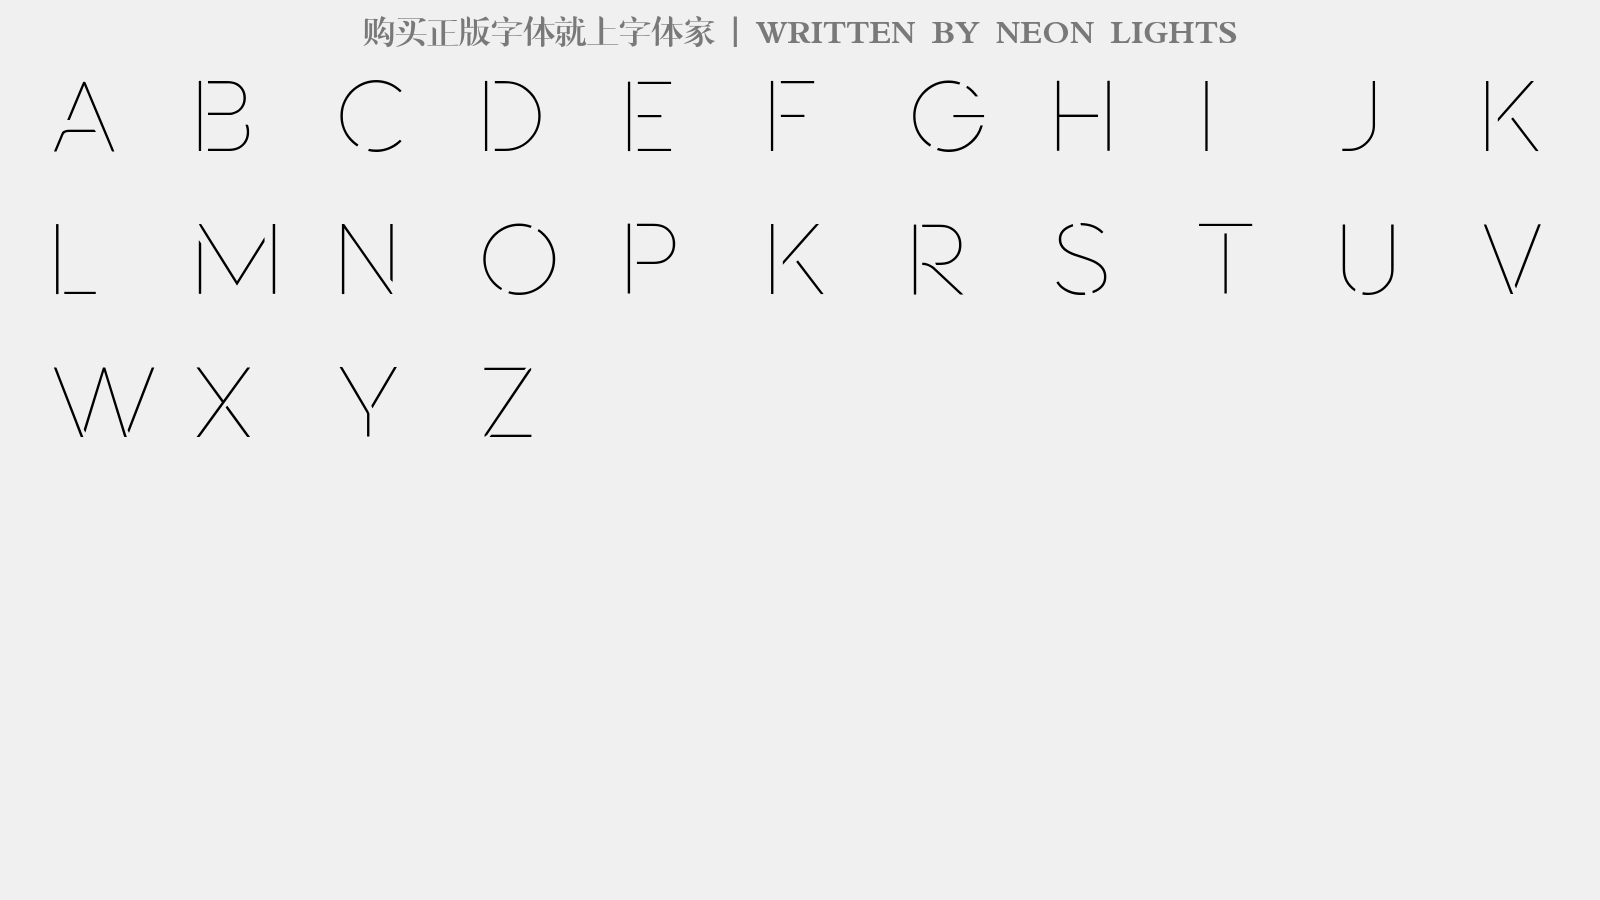 NEON LIGHTS - 大写字母/小写字母/数字